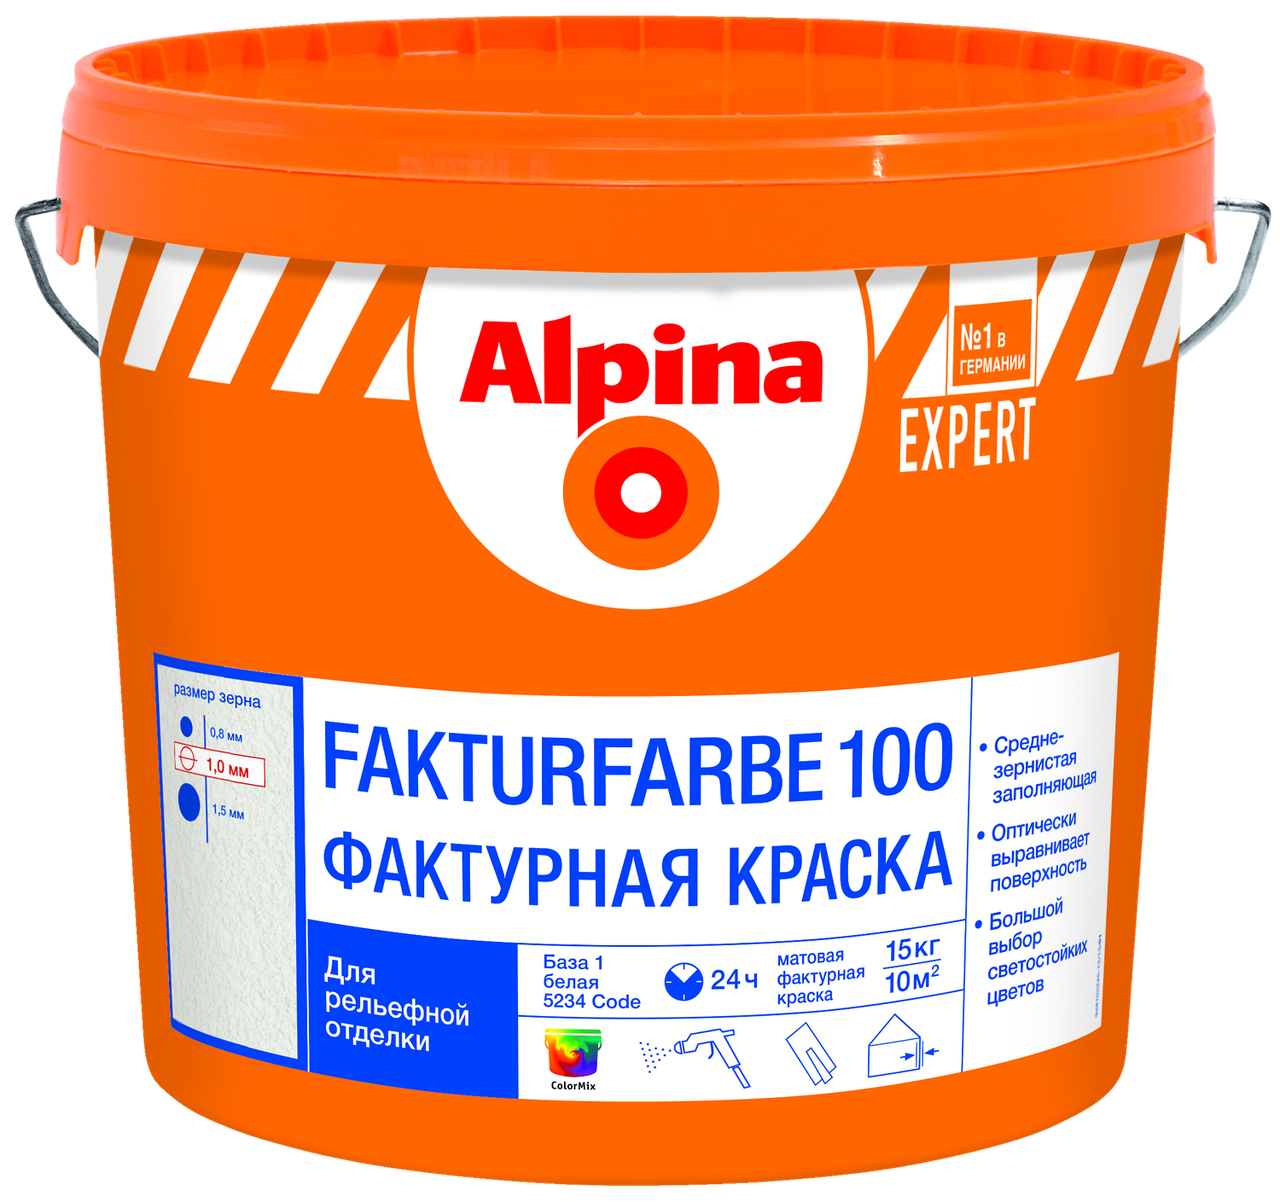 Alpina EXPERT Fakturfarbe 100 База1 15кг